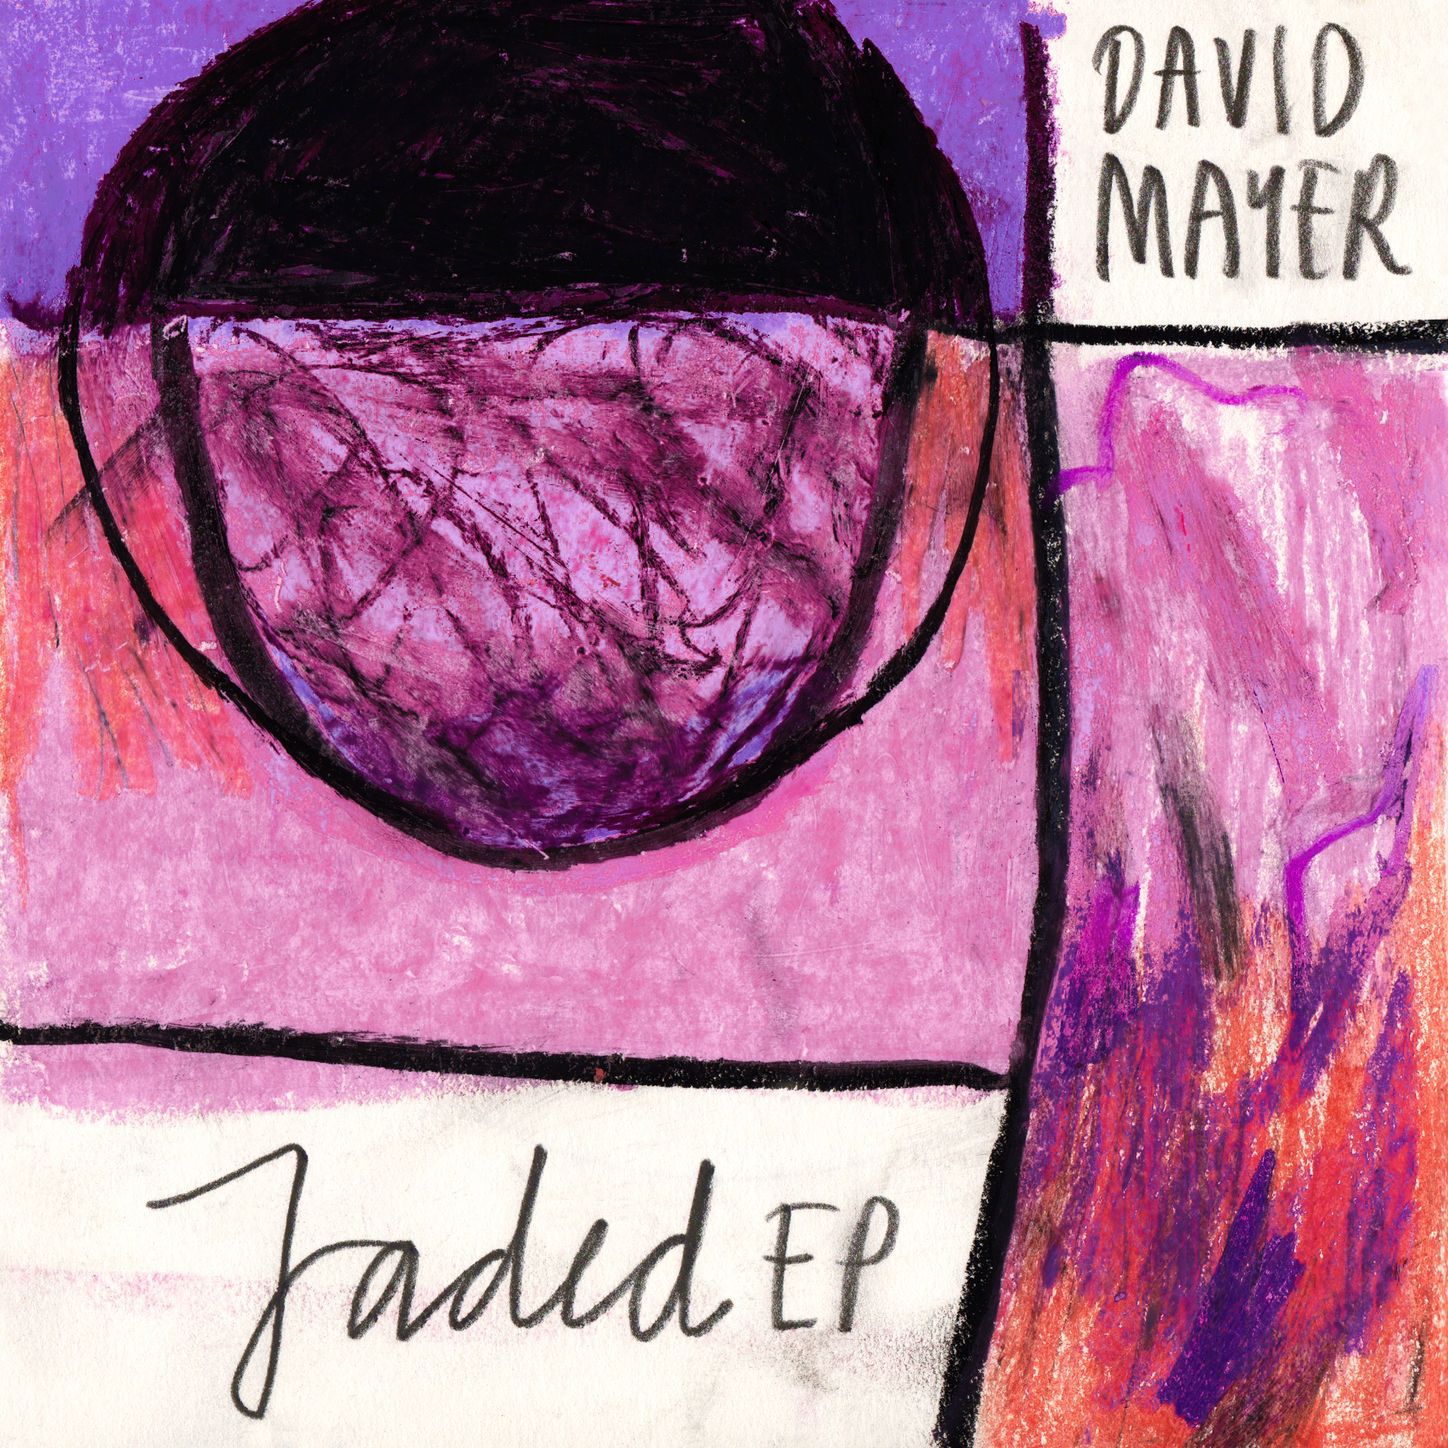 00-David Mayer-Jaded- [KM030]